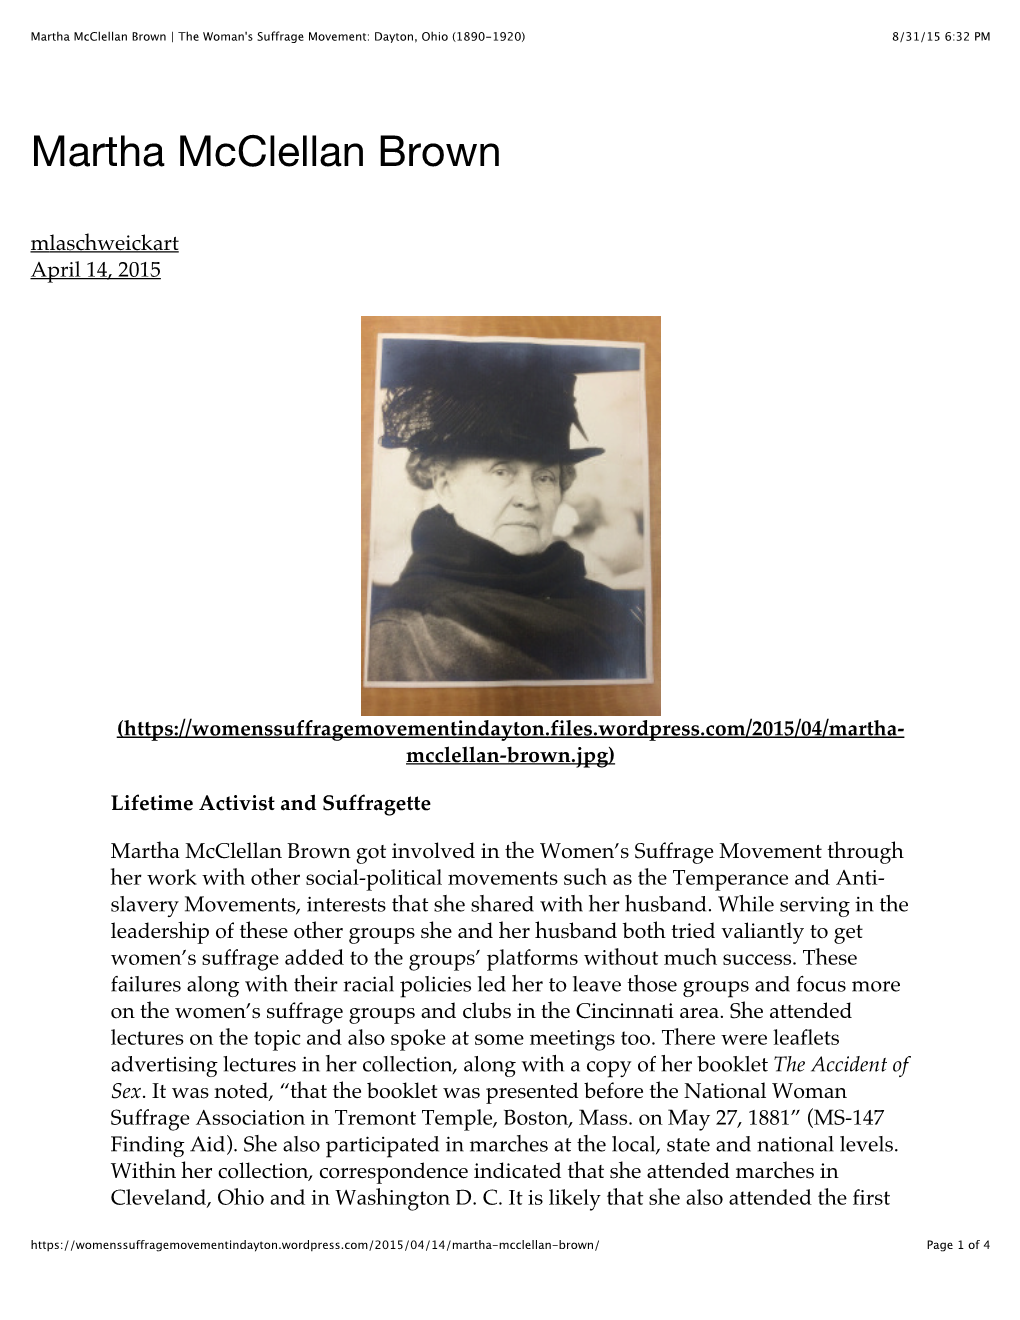 Martha Mcclellan Brown | the Woman's Suffrage Movement: Dayton, Ohio (1890-1920) 8/31/15 6:32 PM